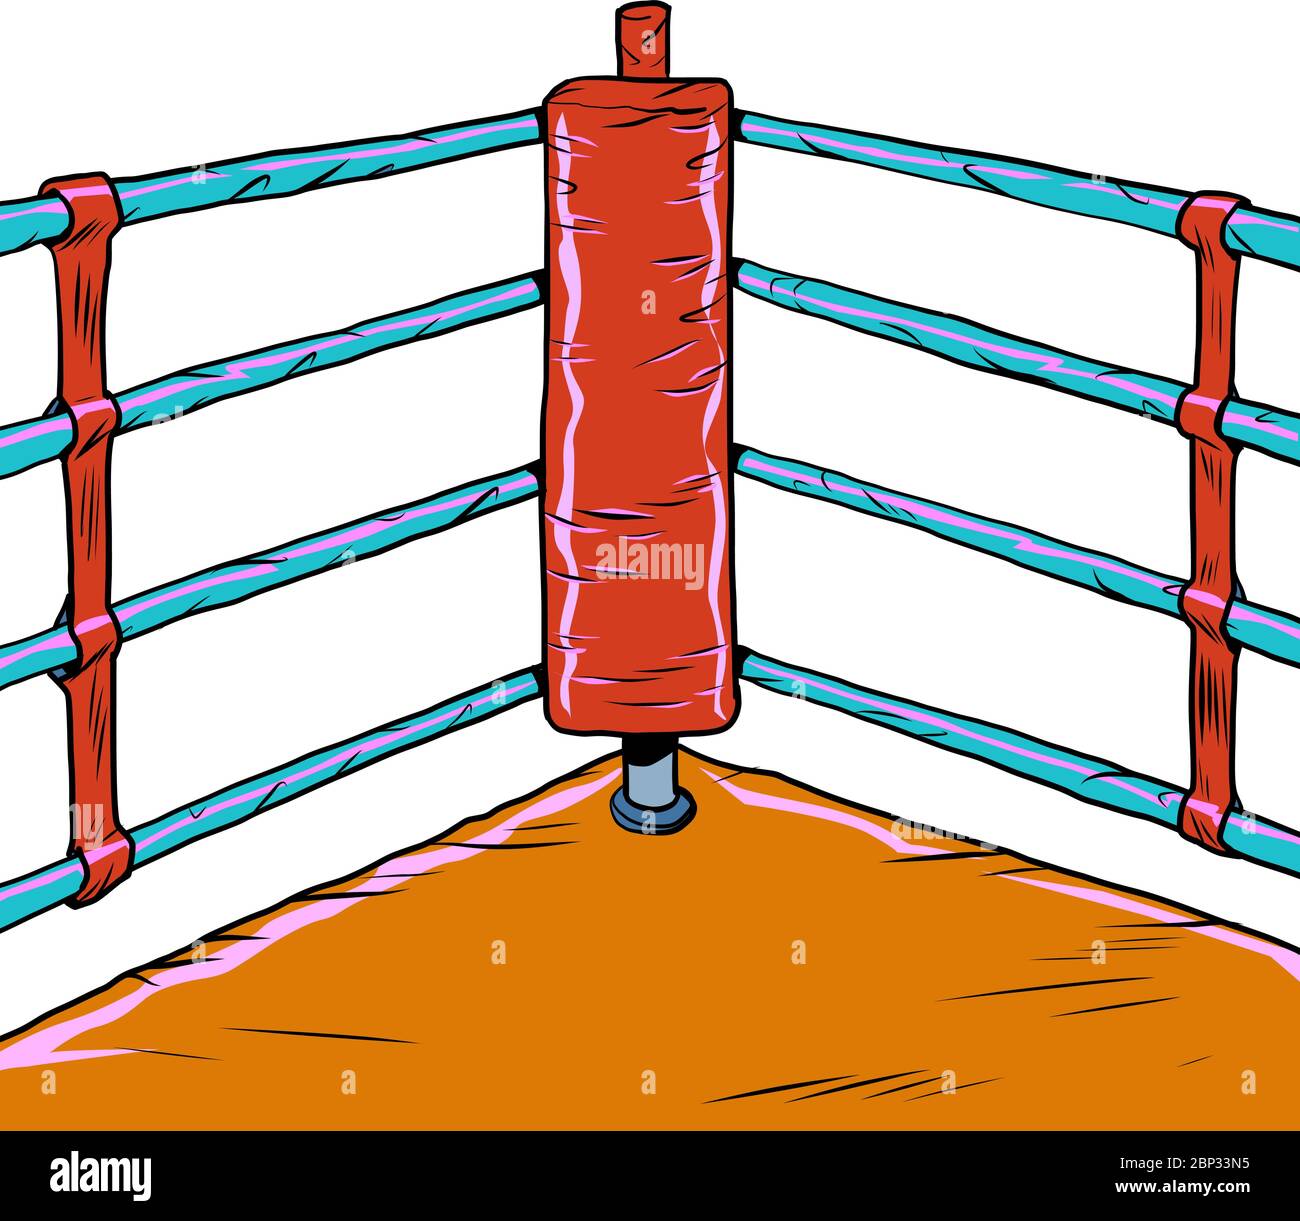 Rote Ecke des Boxing Rings Stock-Vektorgrafik - Alamy